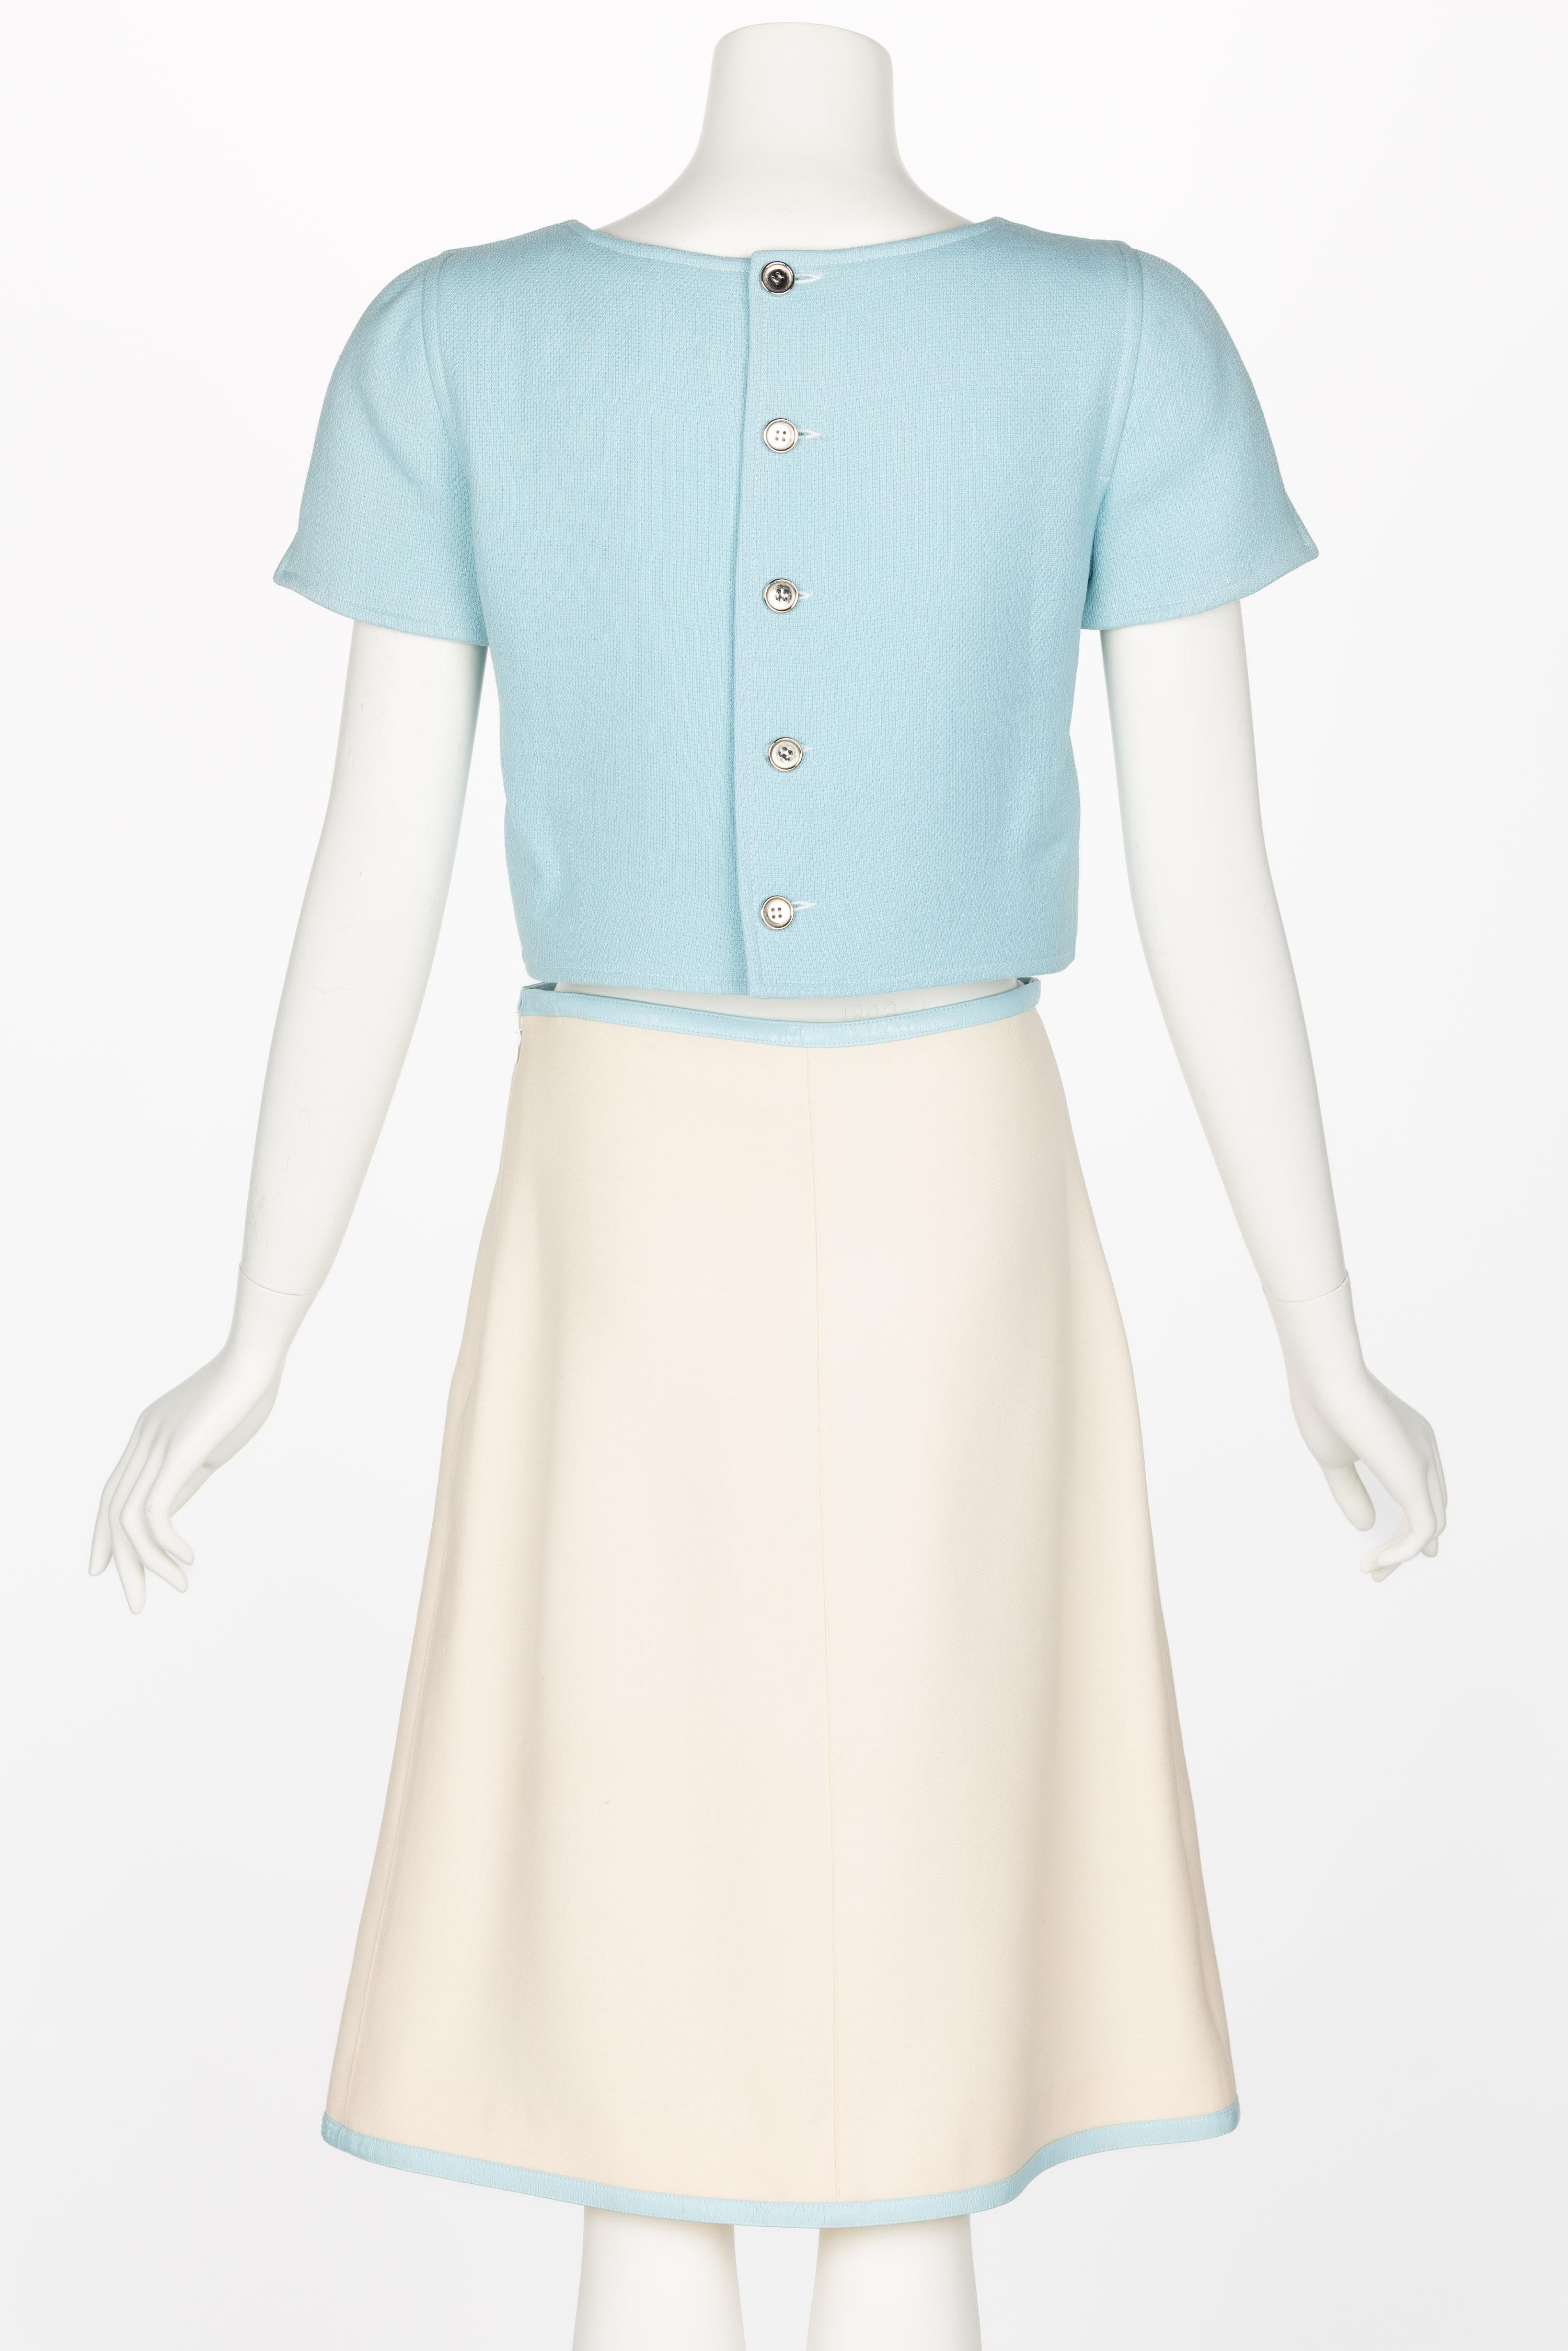 Women's Vintage Courreges Paris Baby Blue Creme Cropped Top and Skirt Set